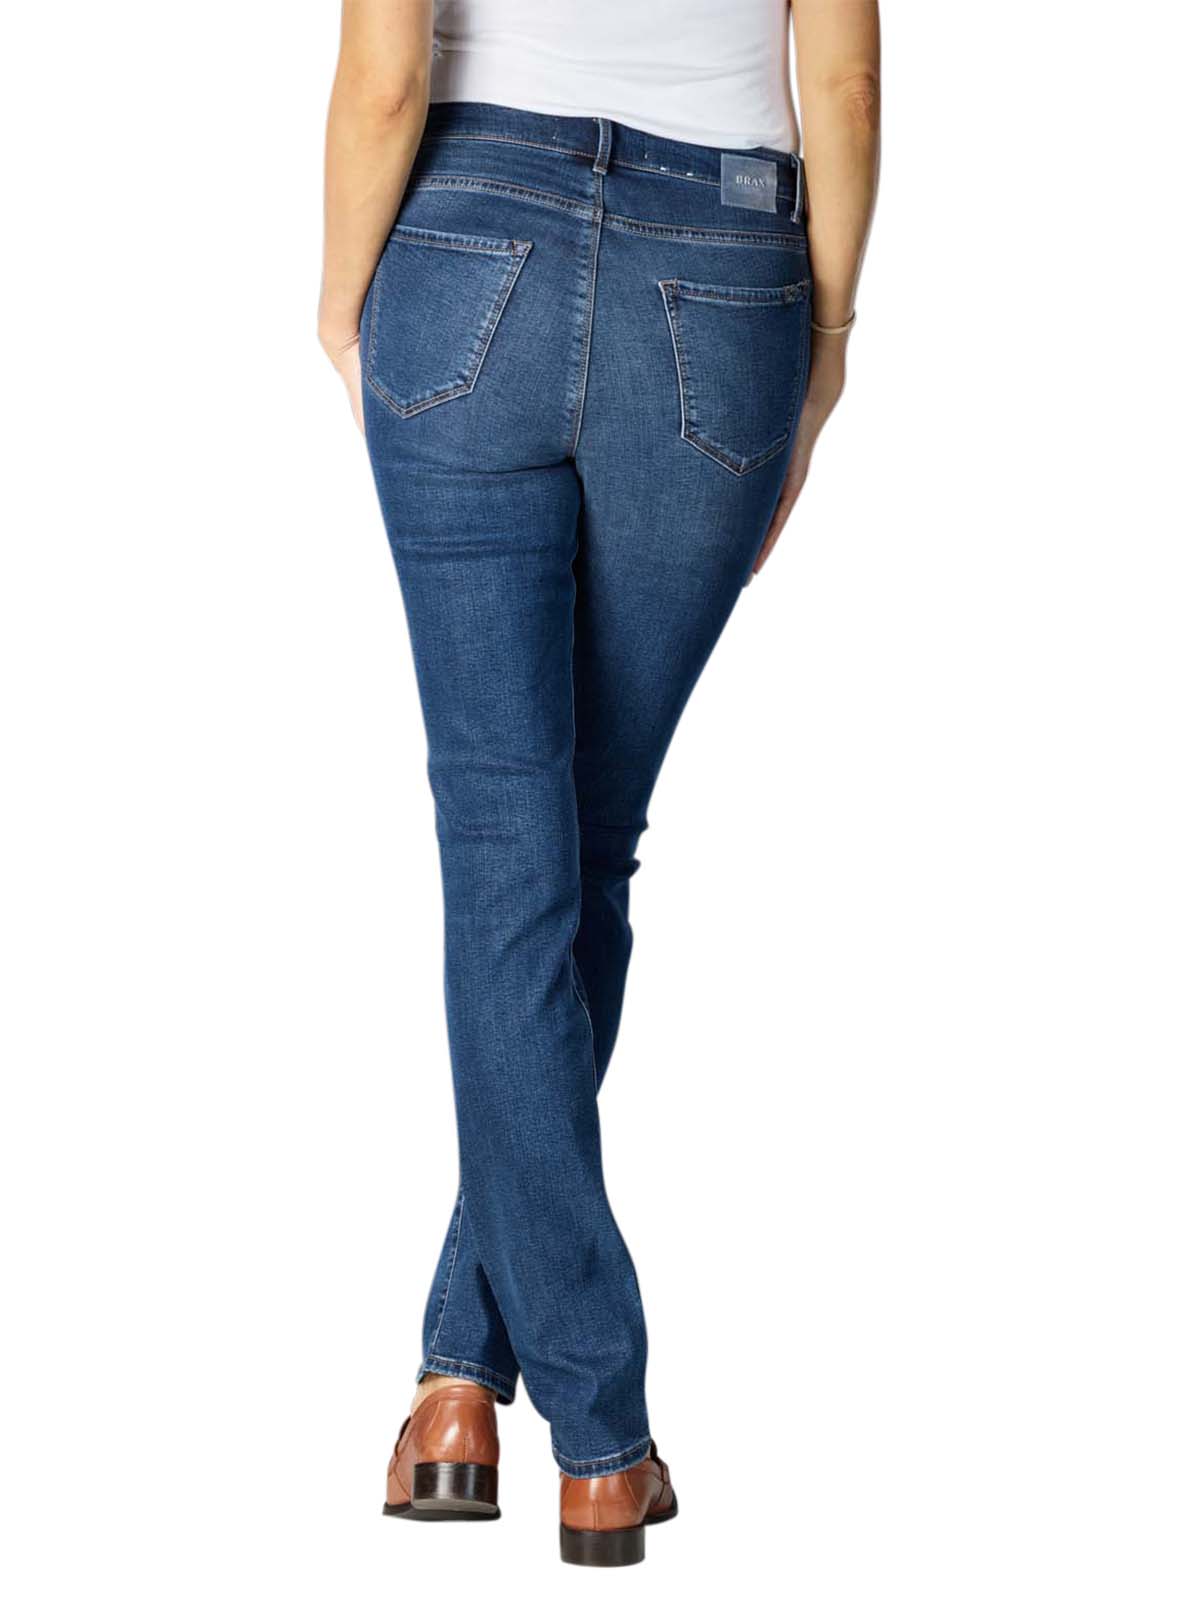 Afleiden auditorium vaardigheid Brax Shakira Jeans Skinny Fit blue Brax Women's Jeans | Free Shipping on  BEBASIC.CH - SIMPLY LOOK GOOD